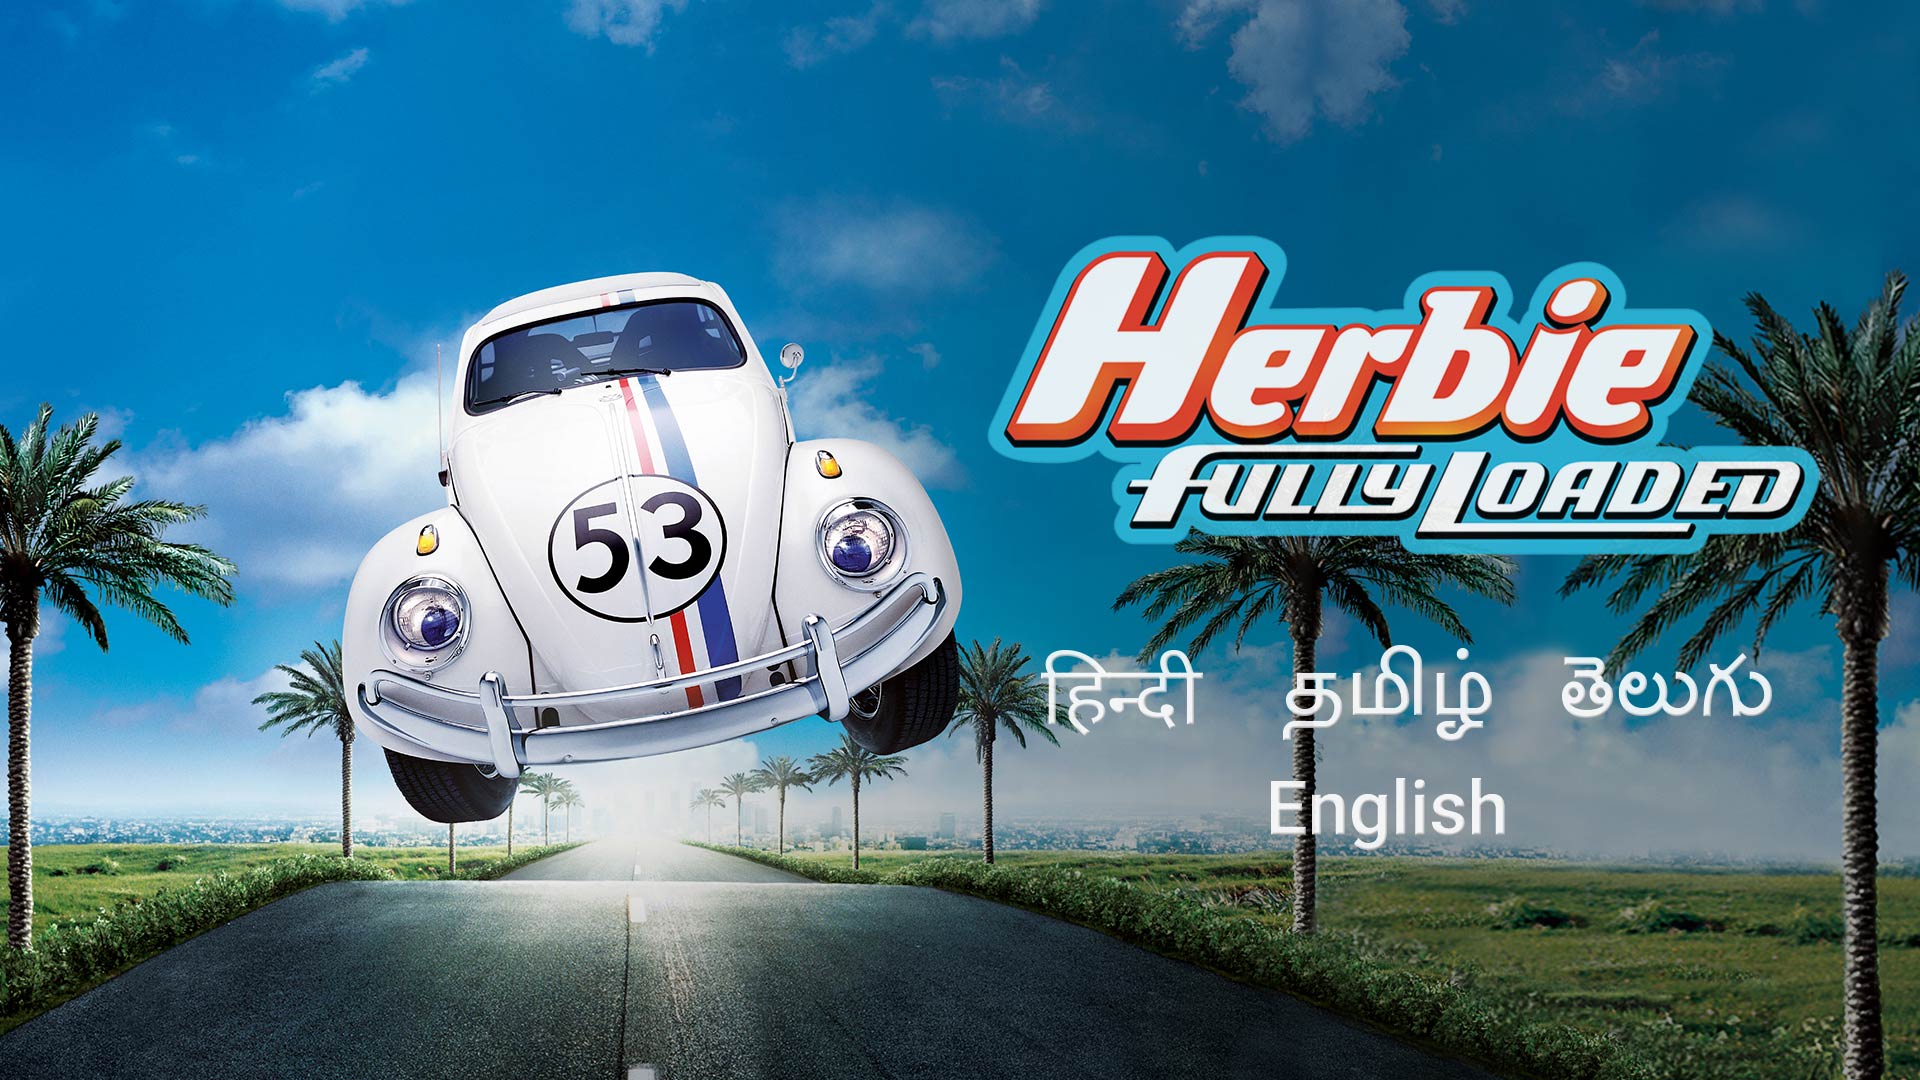 Herbie: Fully Loaded